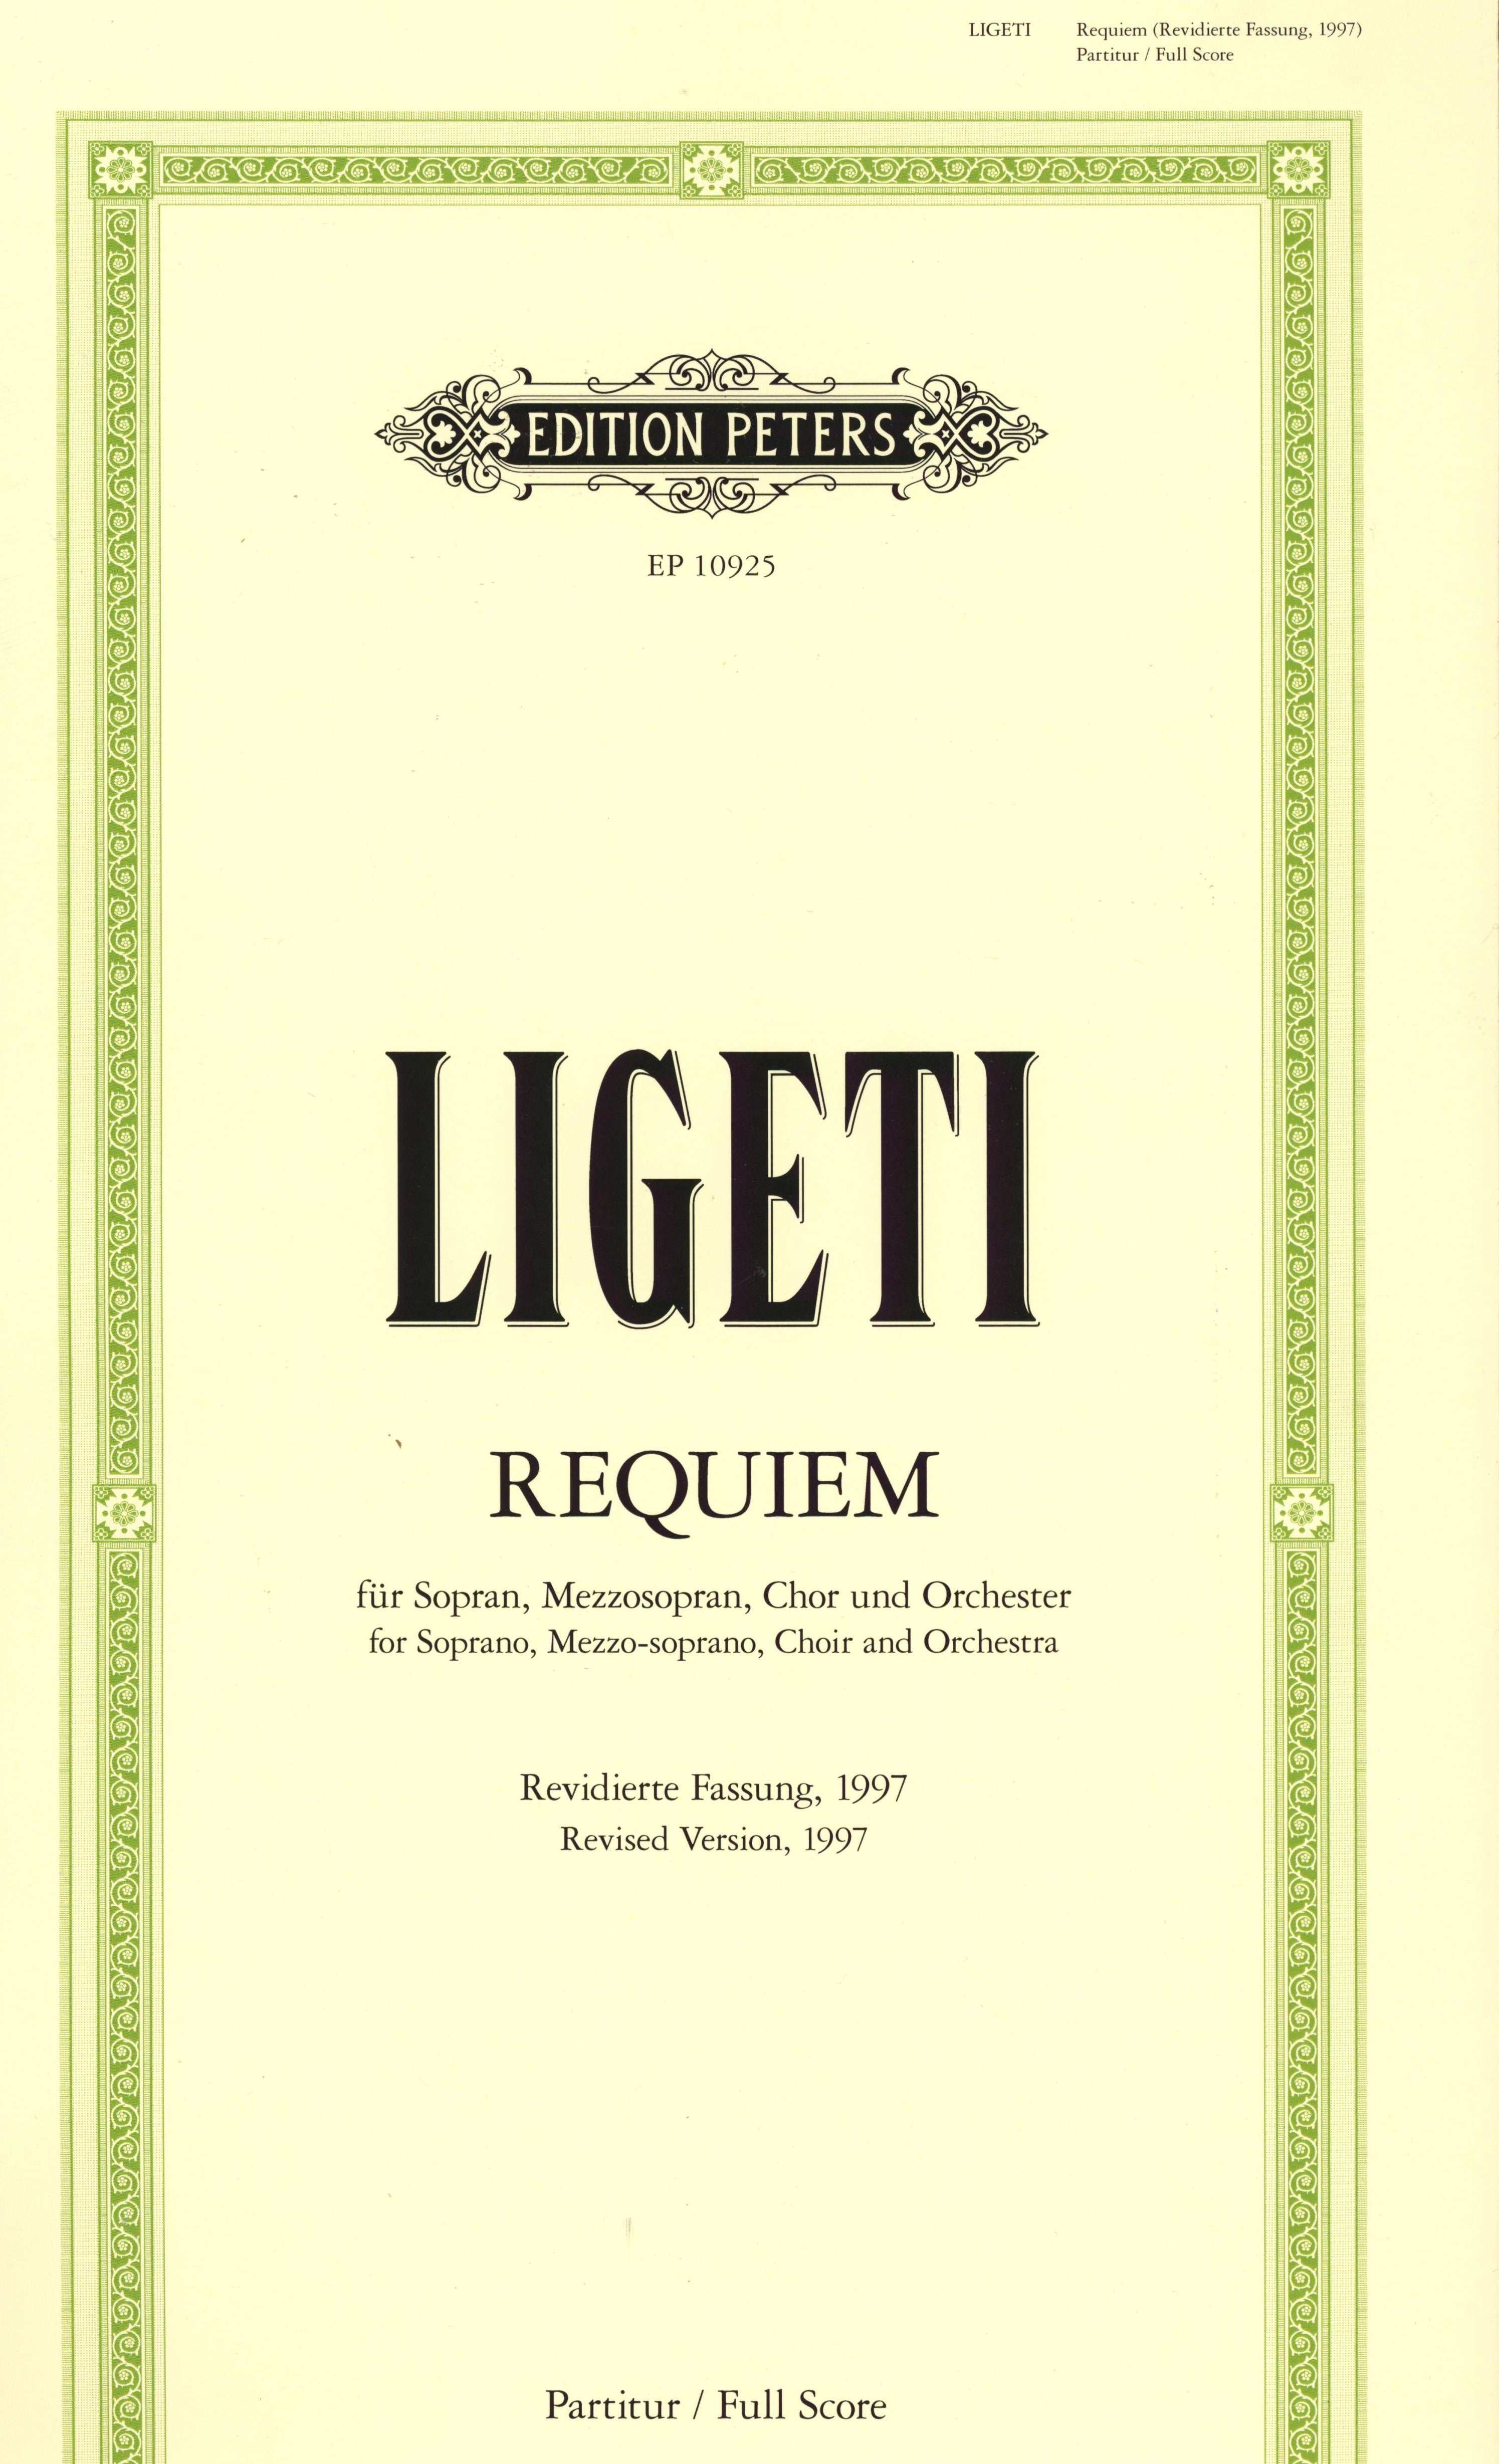 Ligeti: Requiem - Revised Version -1997